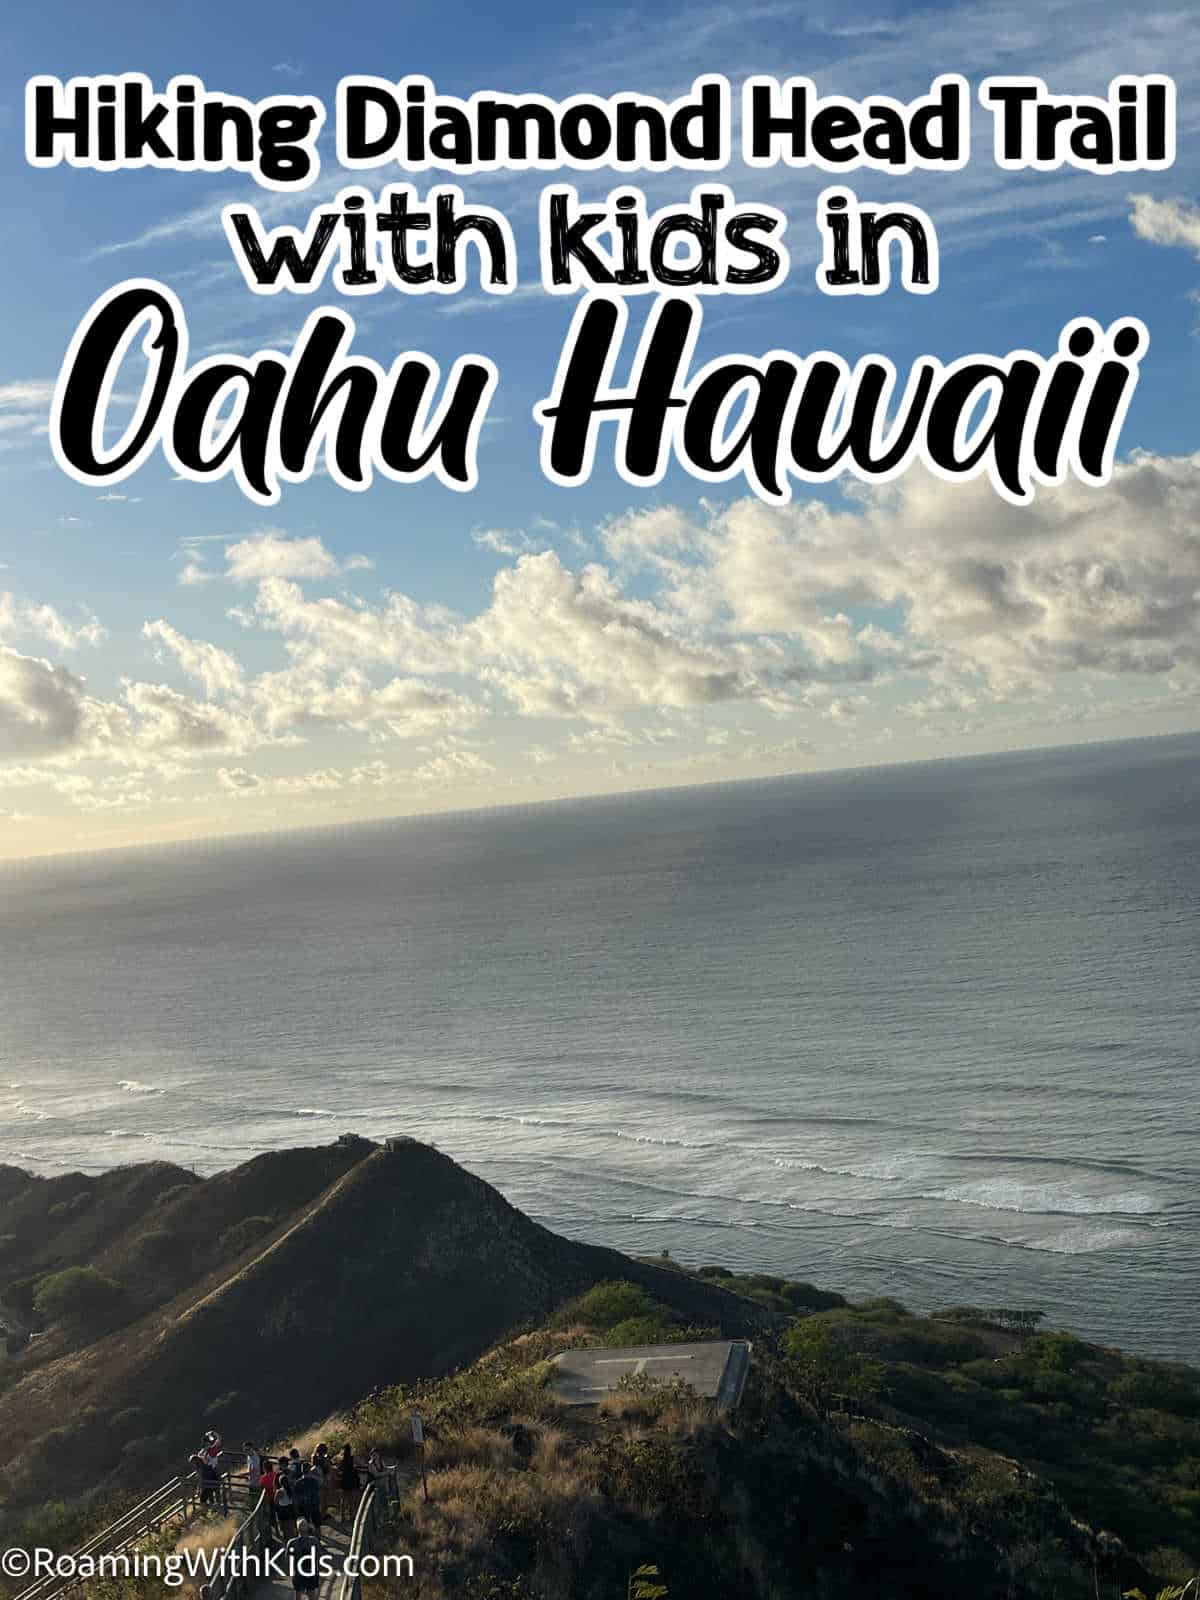 Hiking Diamond Head Trail in O’ahu Hawaii with Kids